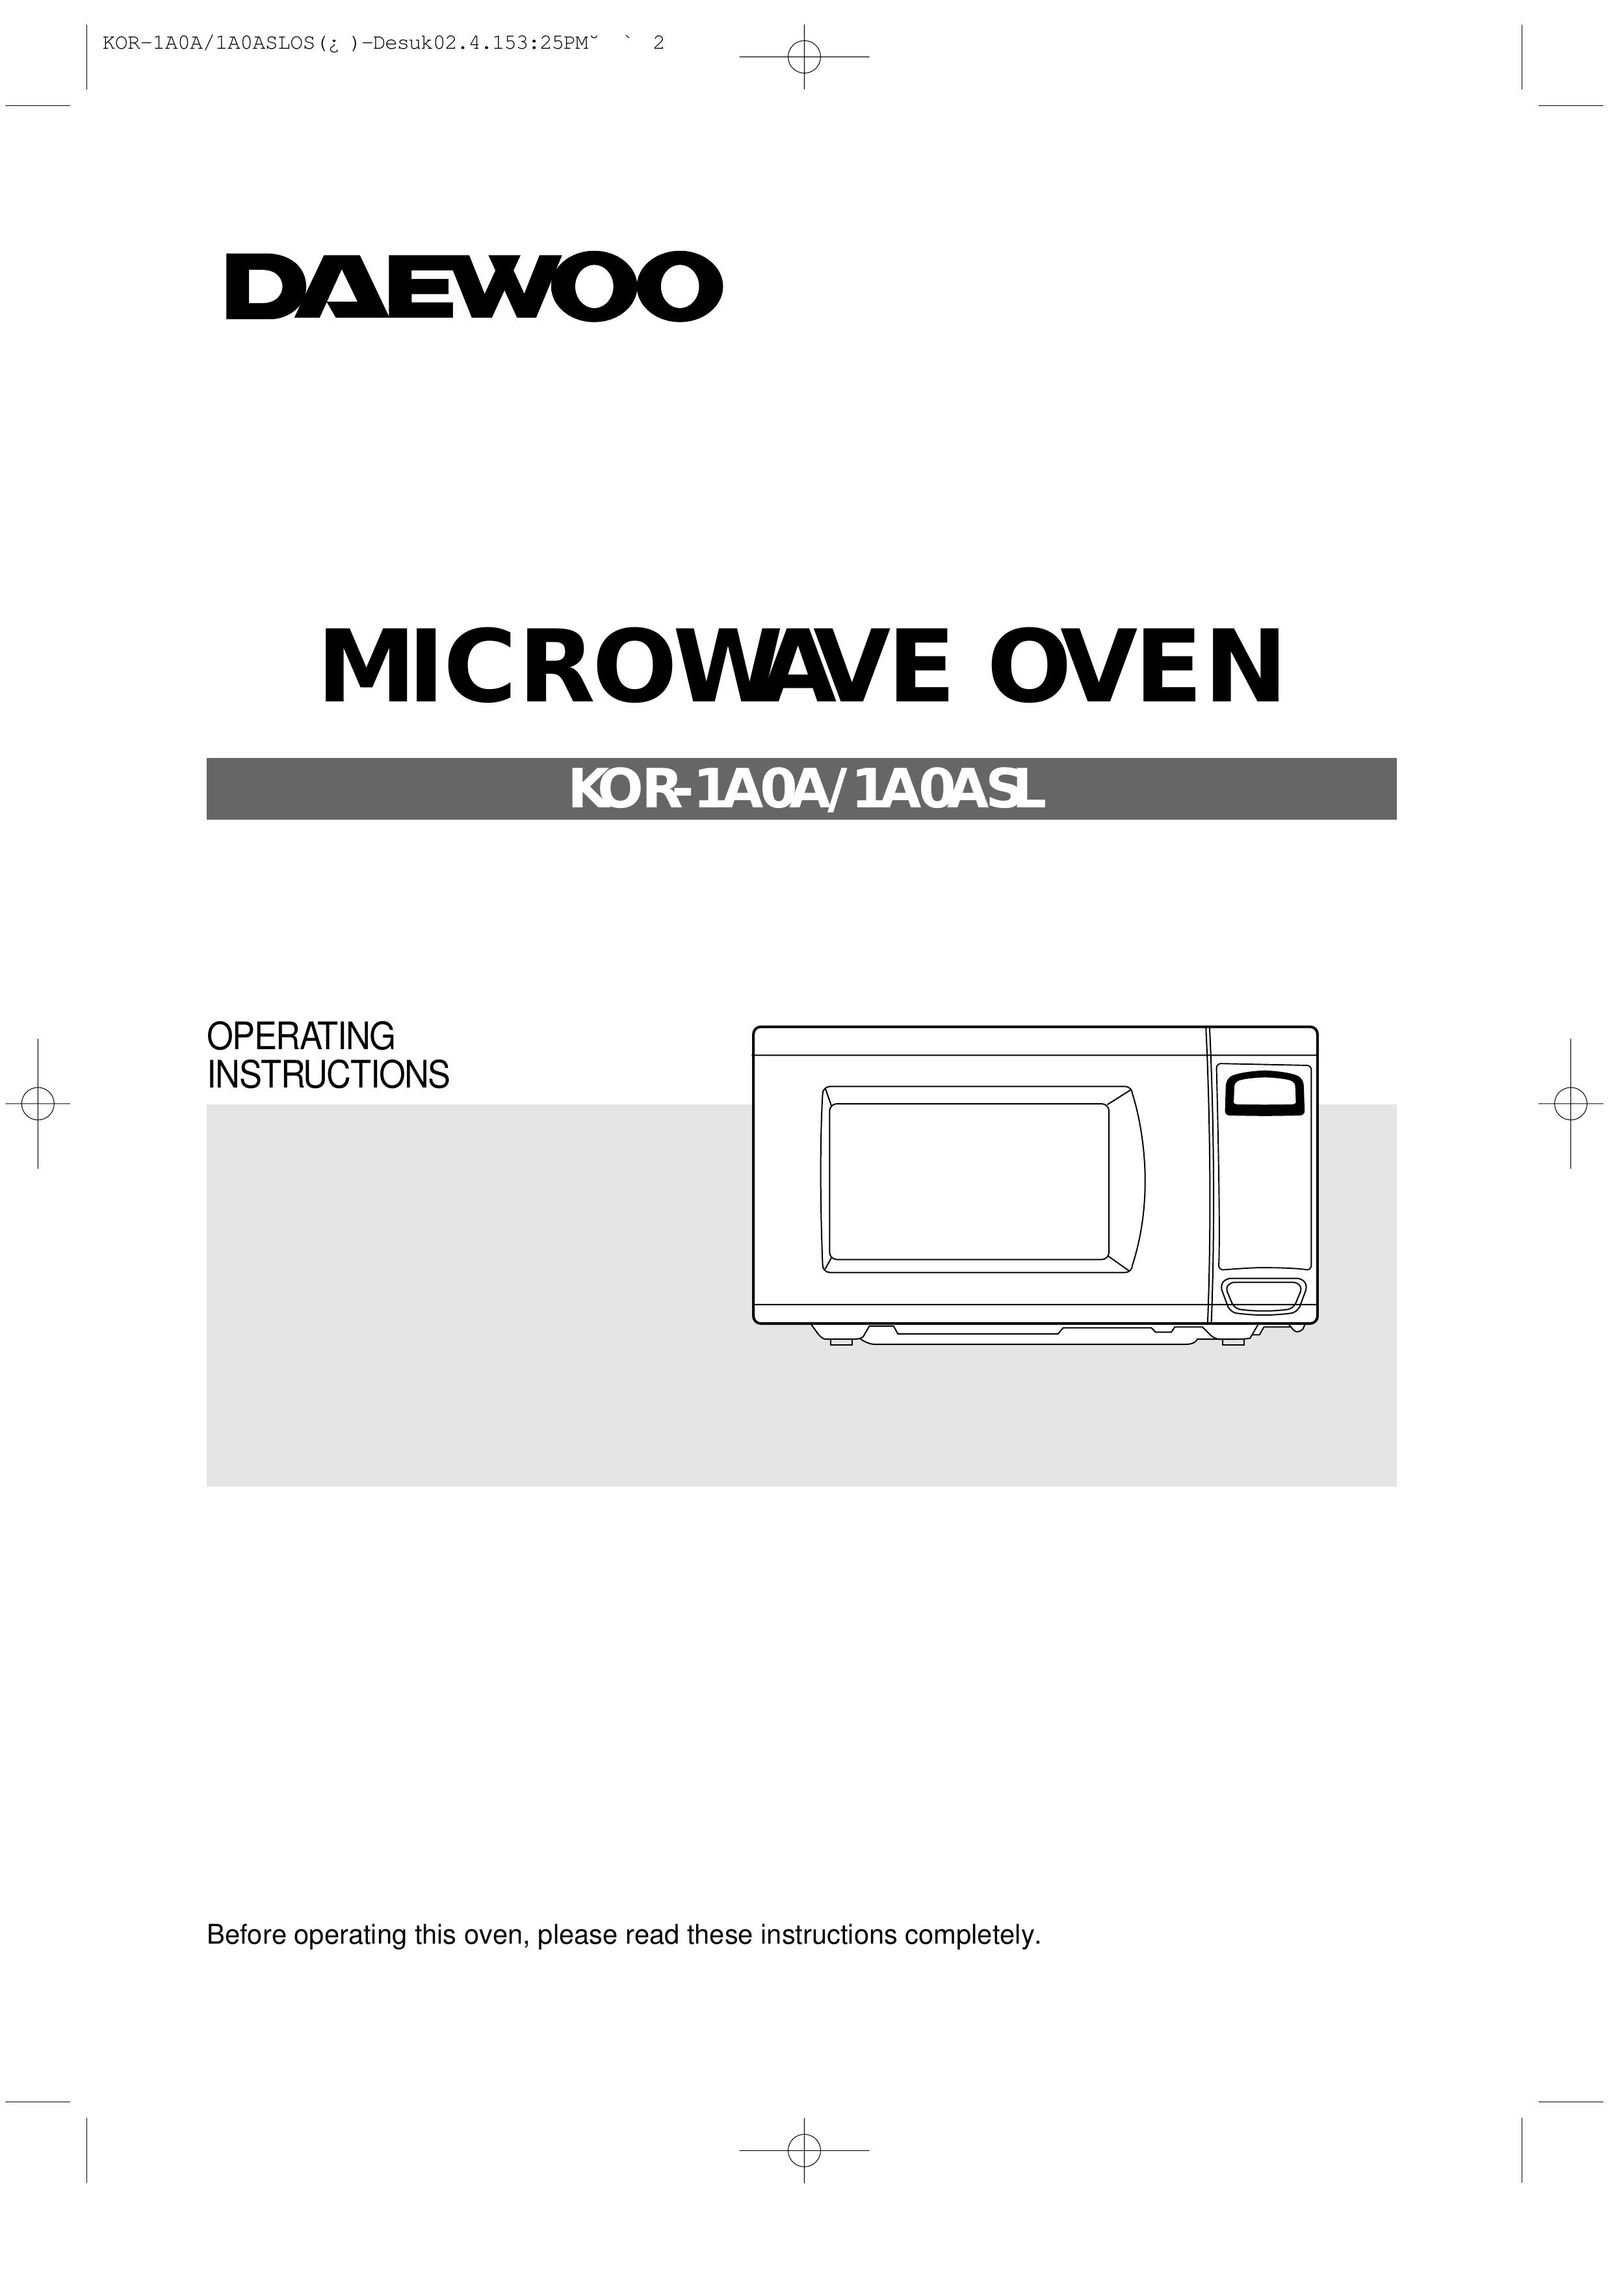 Daewoo 1A0ASL Microwave Oven User Manual